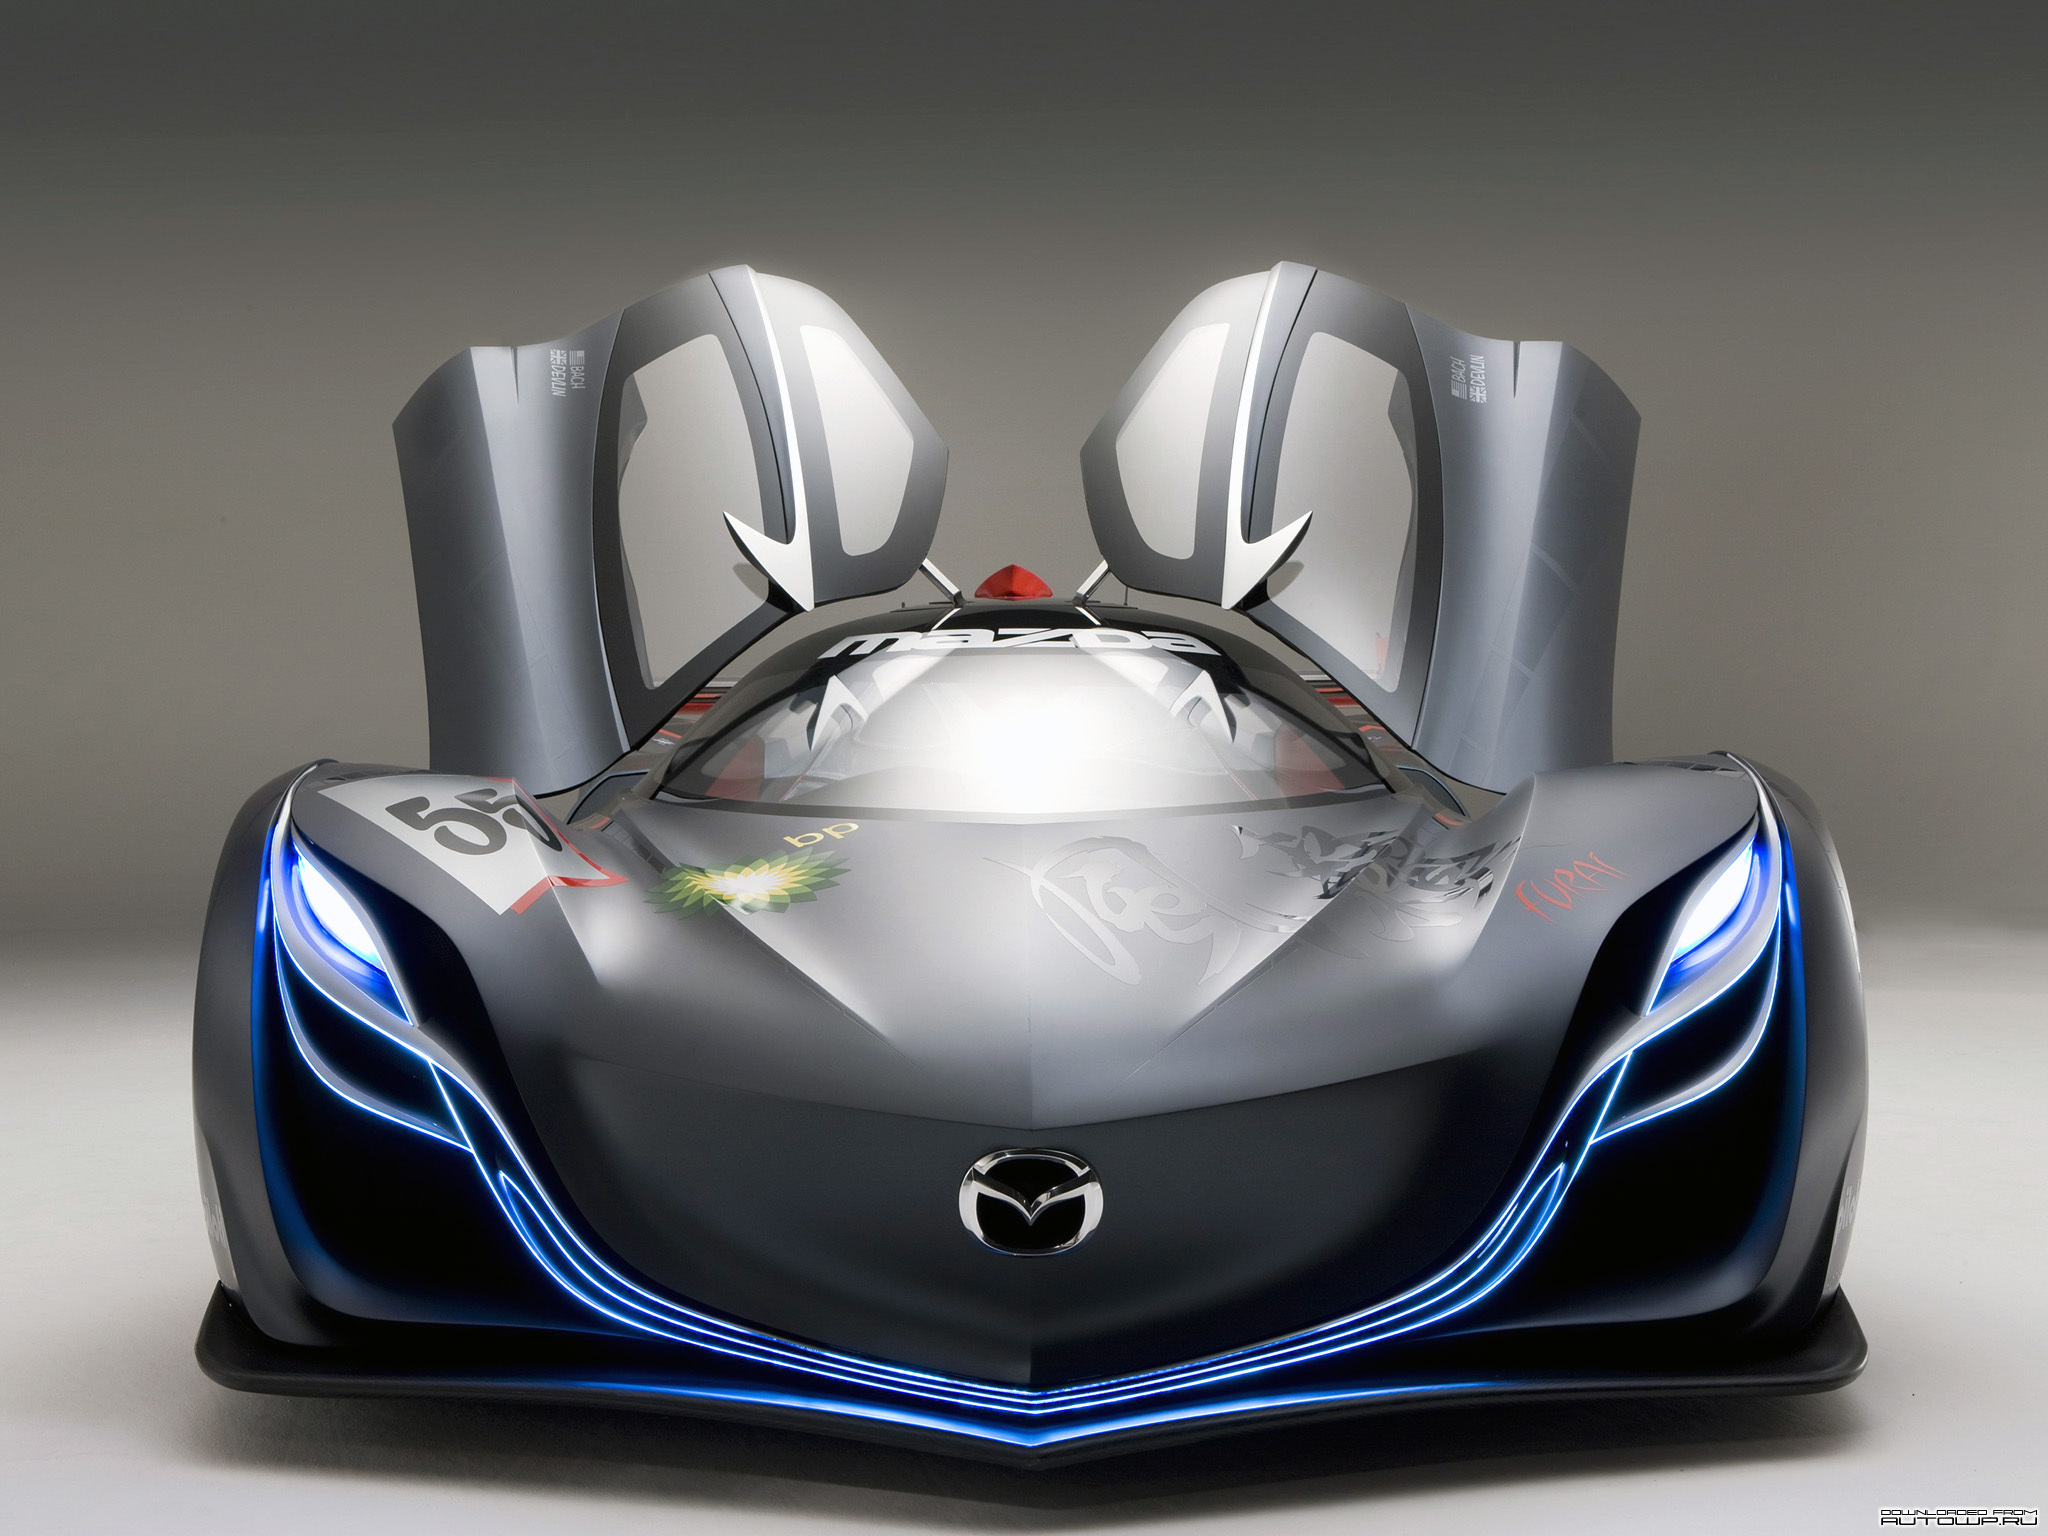 cars, Mazda, vehicles, supercars, concept cars, Mazda Furai, front view - desktop wallpaper